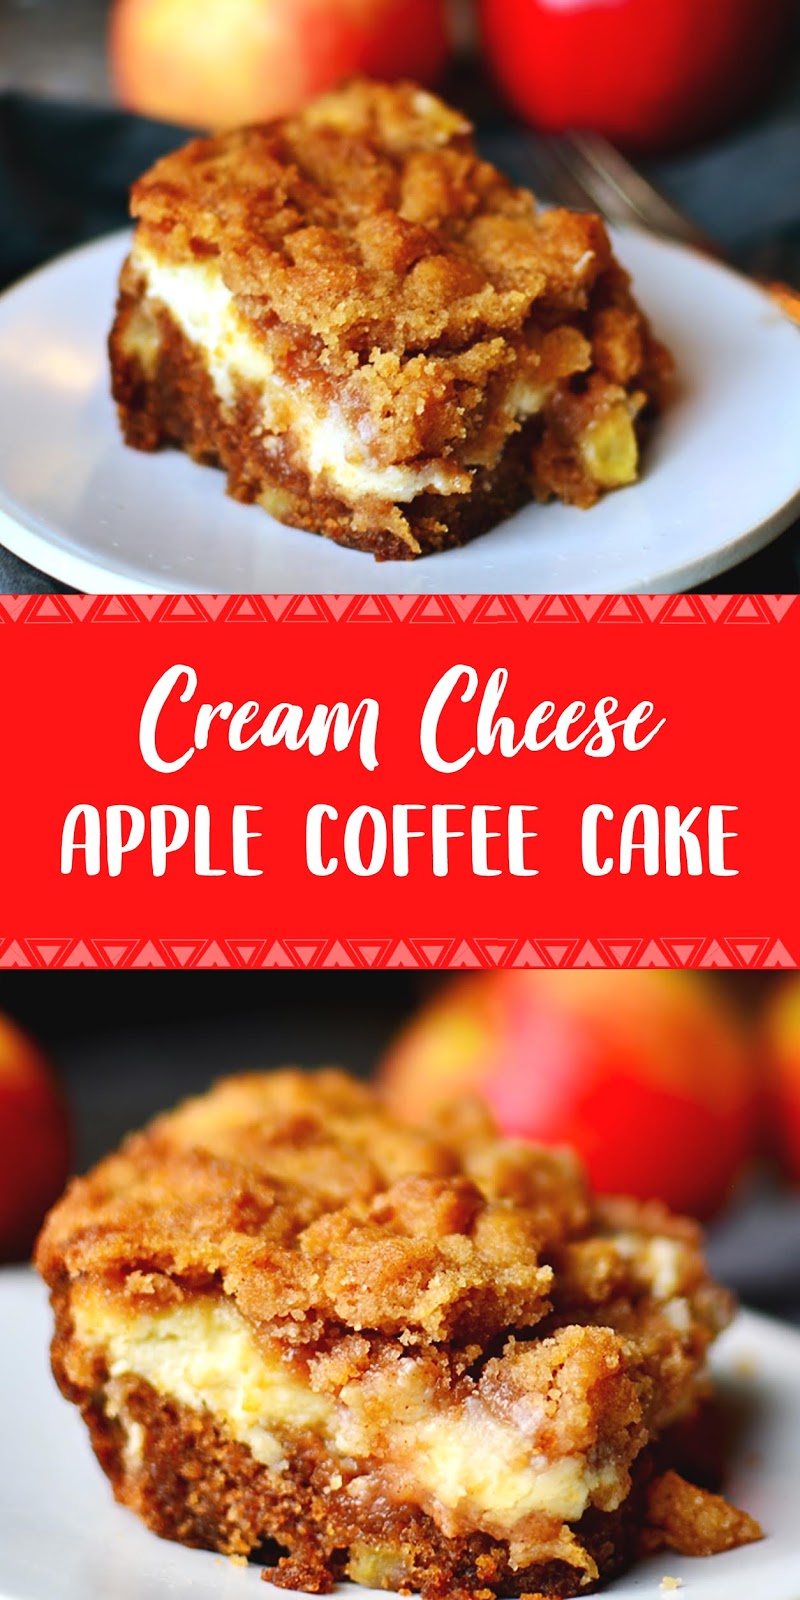 thepopularrecipes11: Cream Cheese Apple Coffee Cake